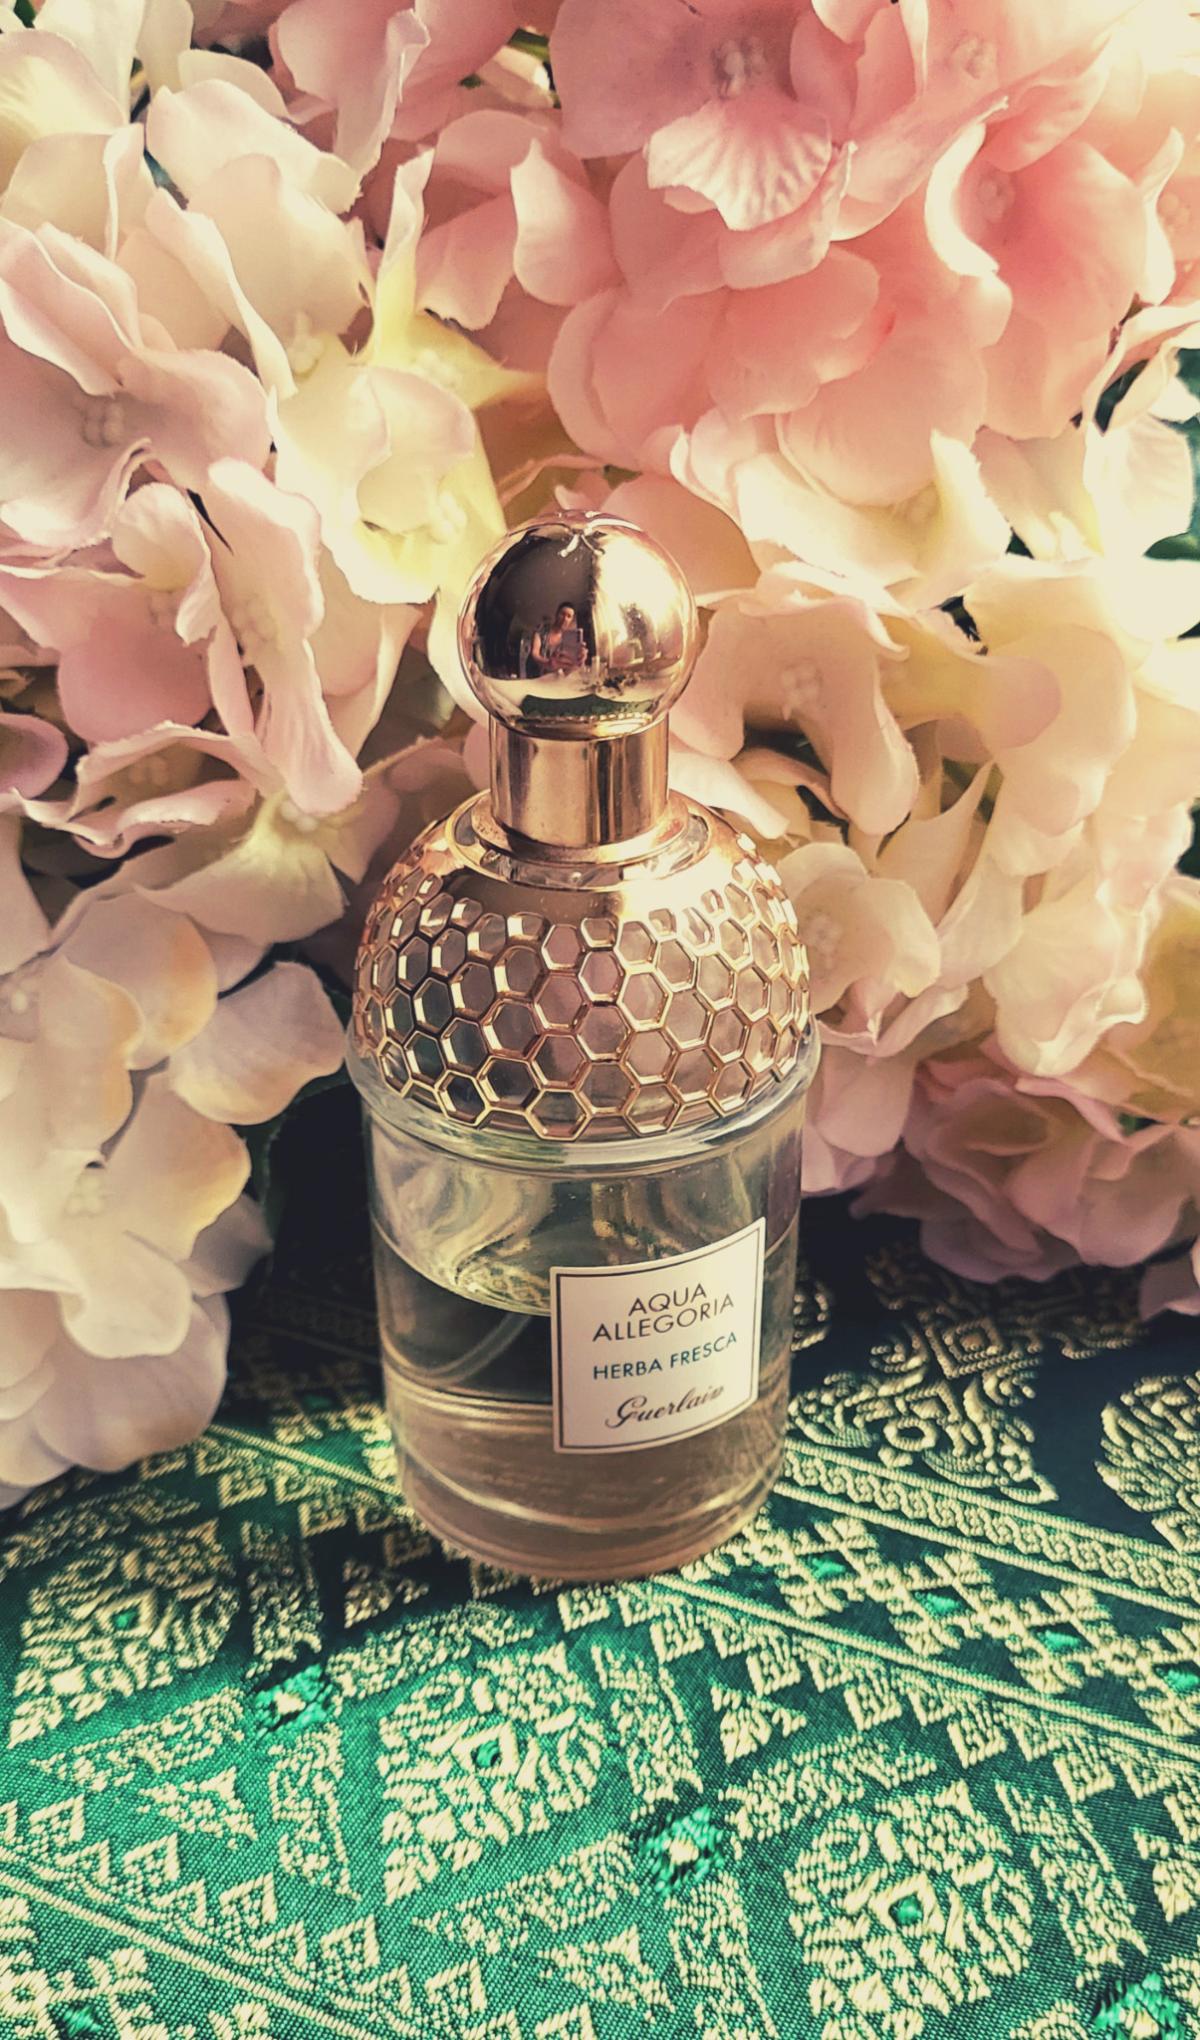 Aqua Allegoria Herba Fresca Guerlain perfume - a fragrance for women ...